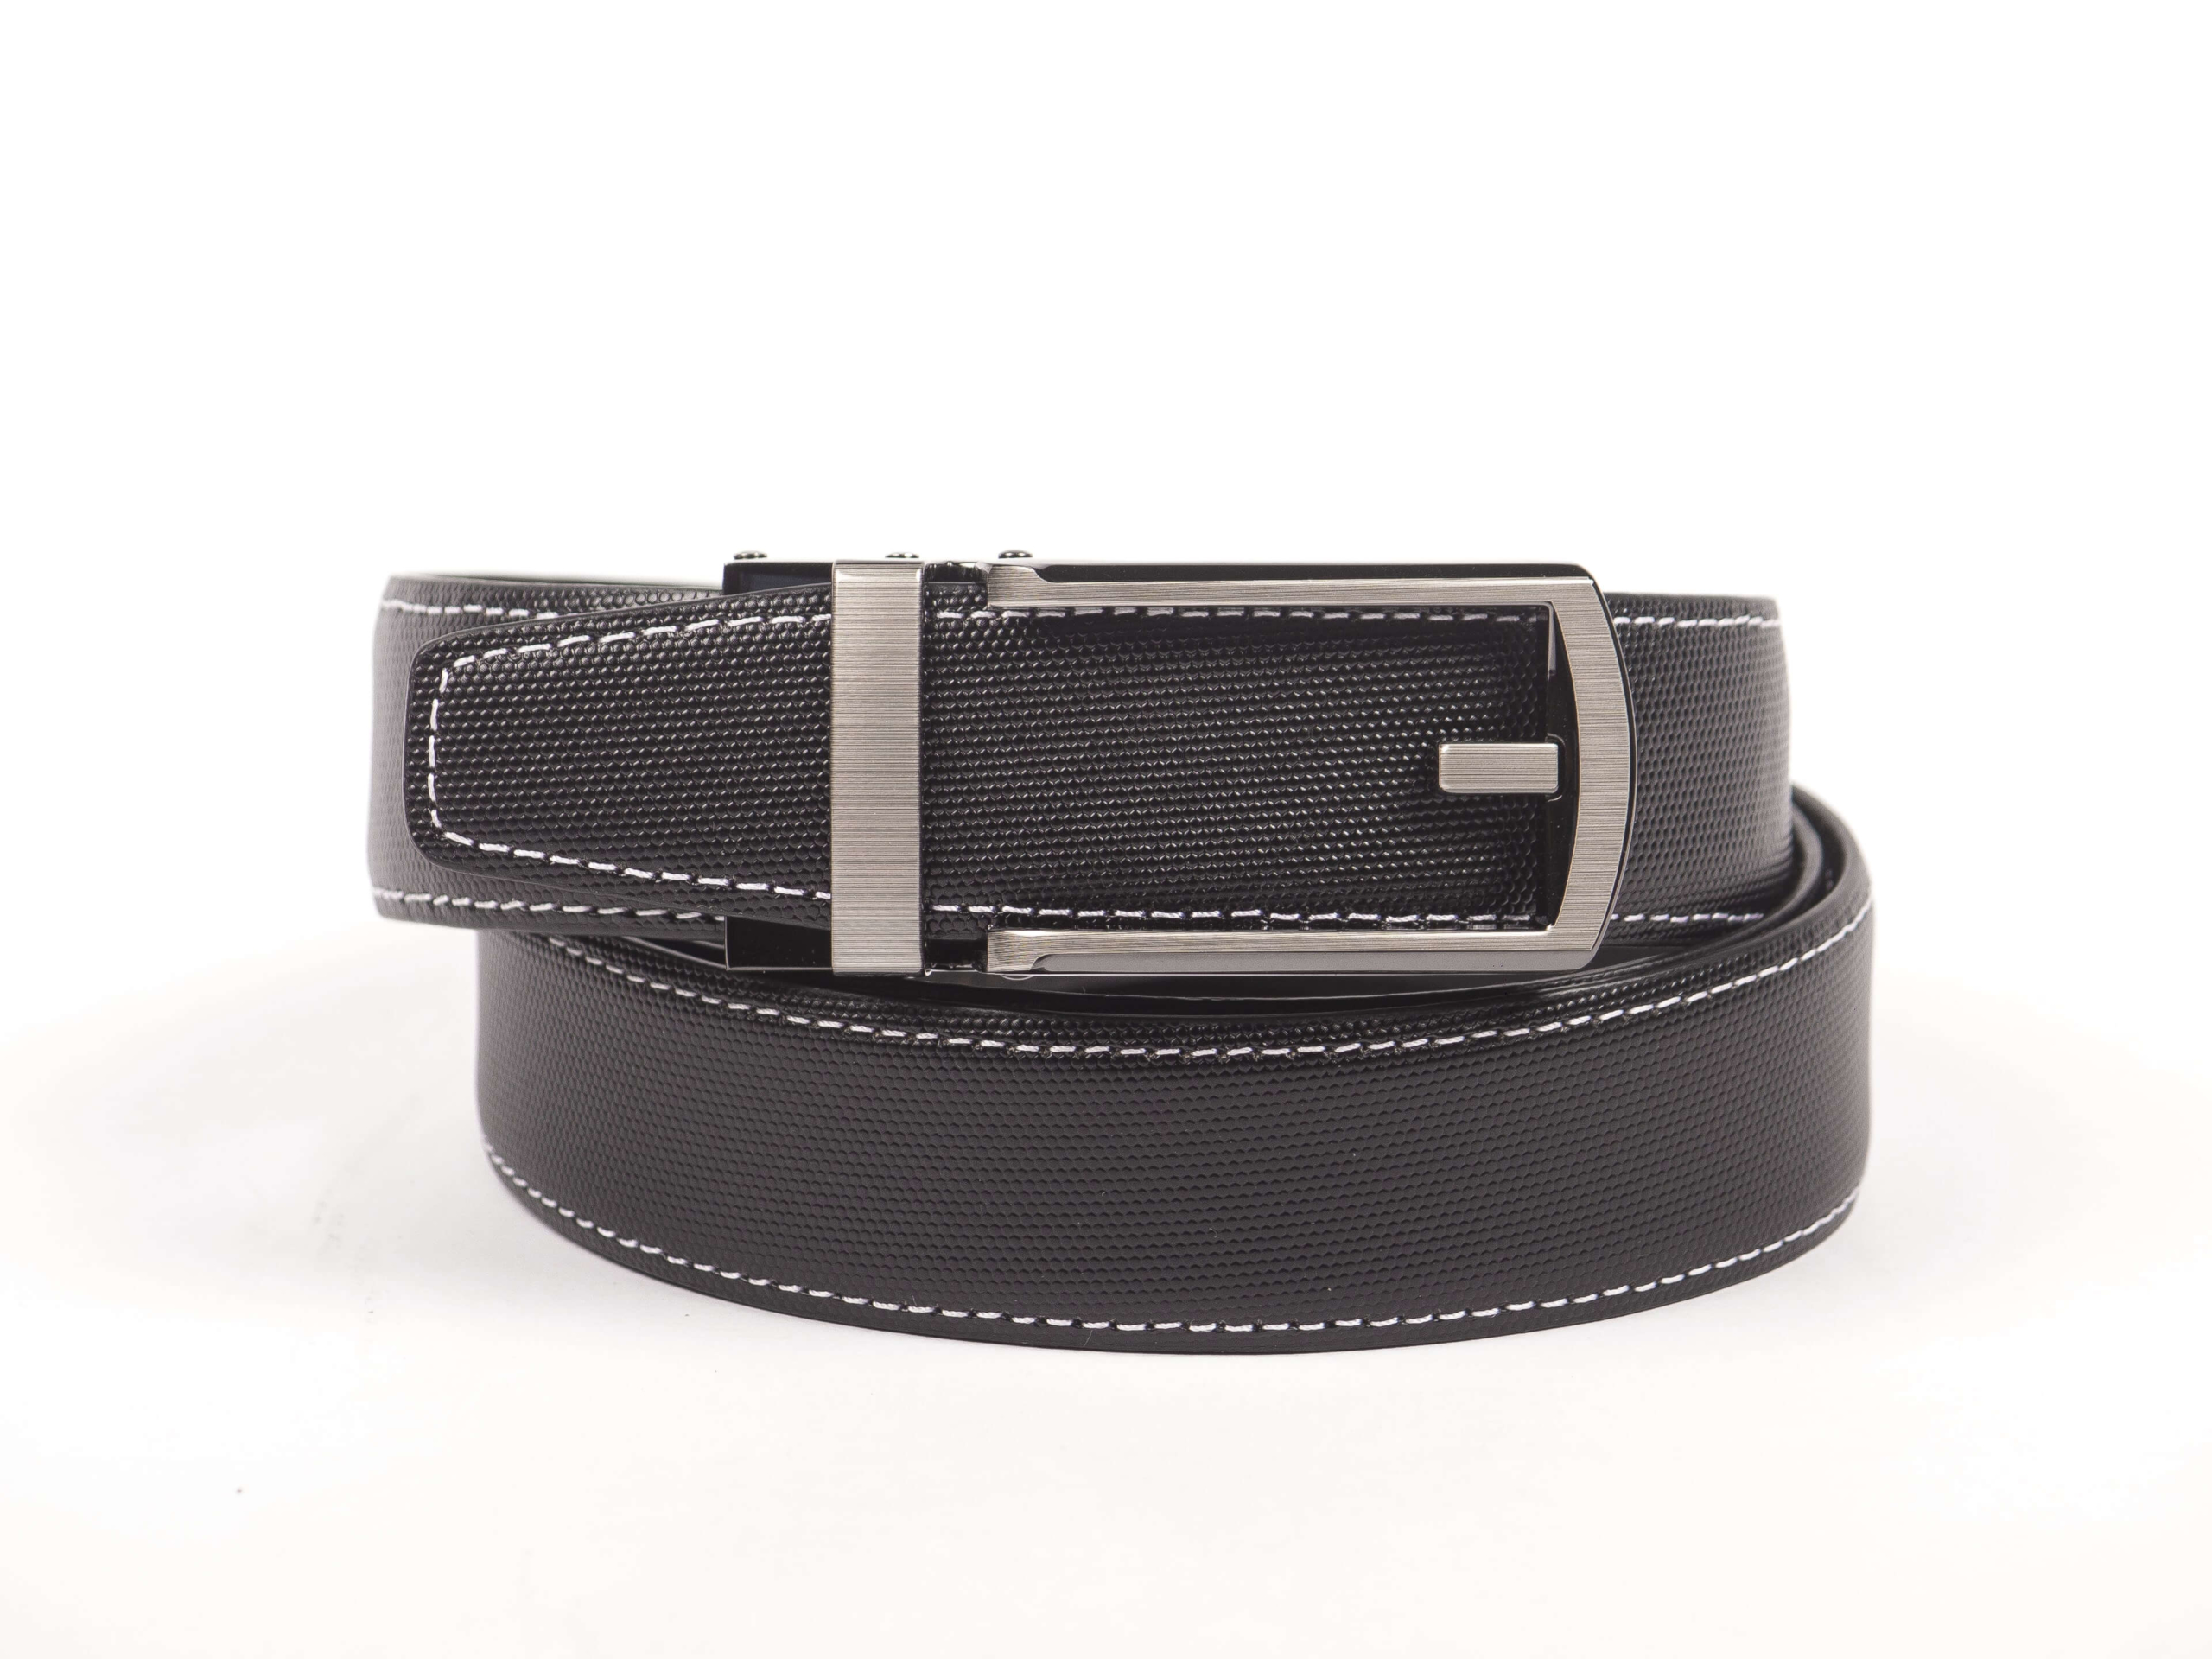 Tru Fit Pilot Belt - Regency Black Genuine Leather